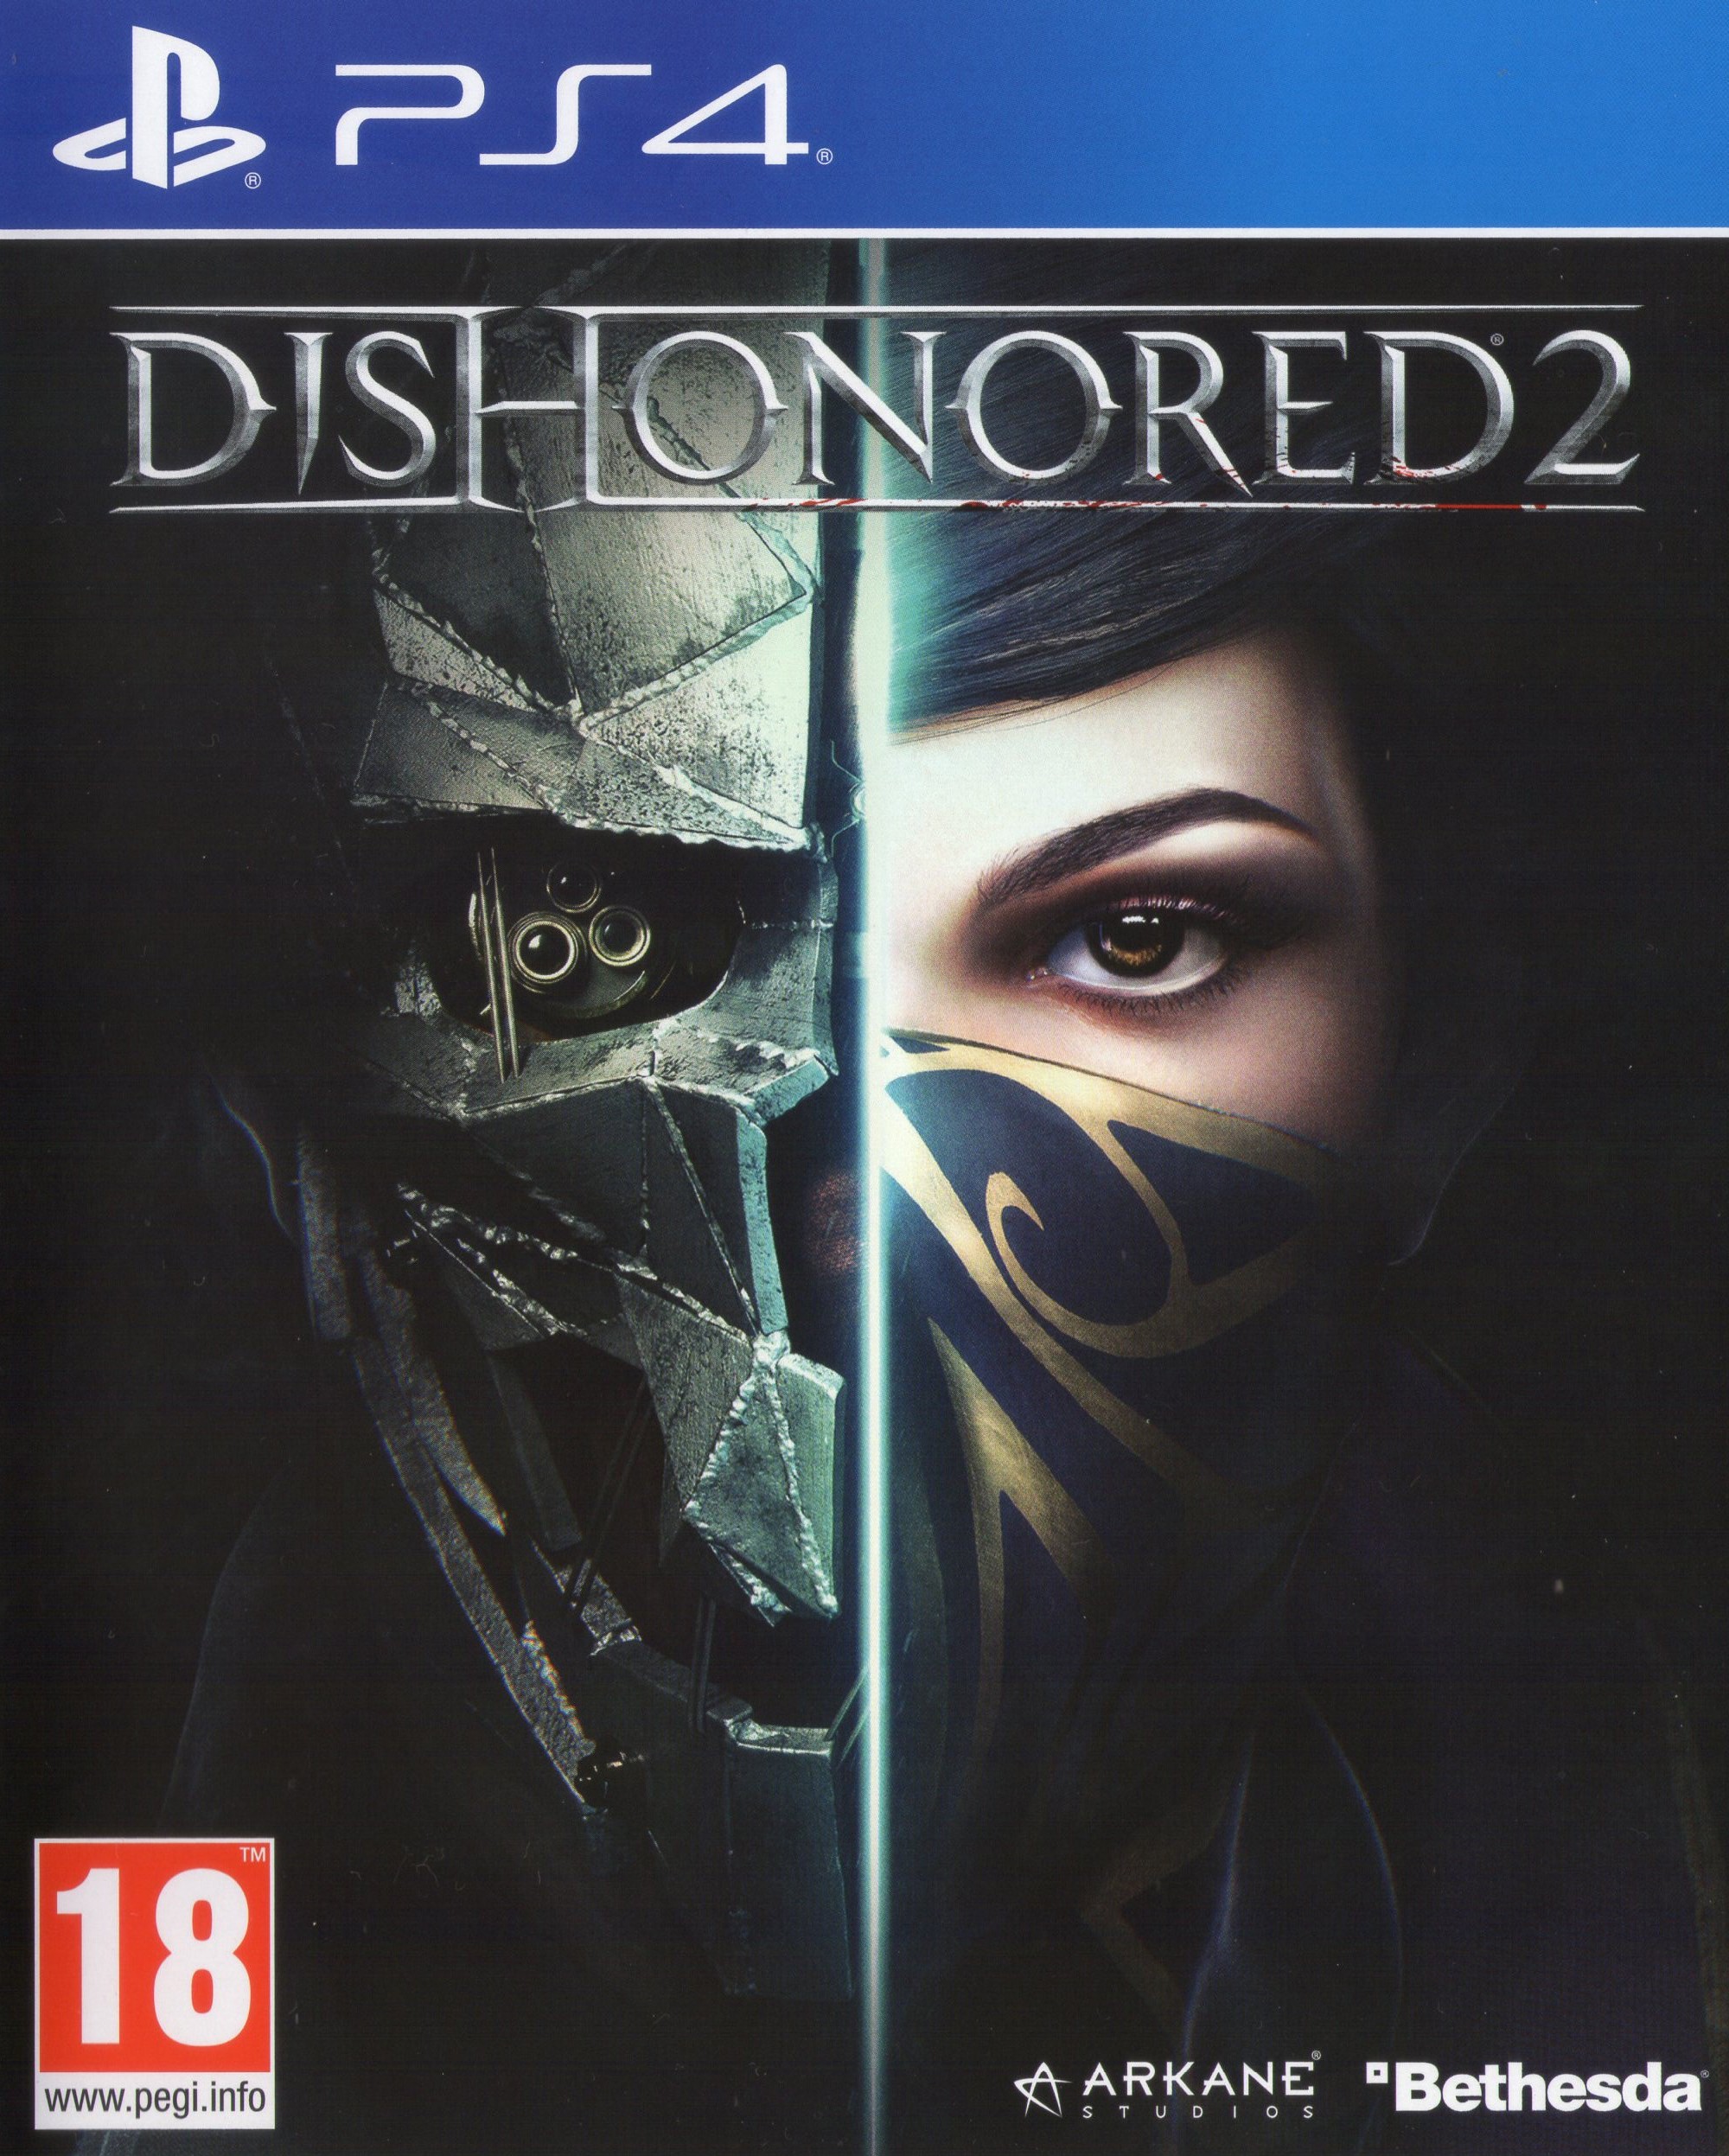 'Dishonored 2'